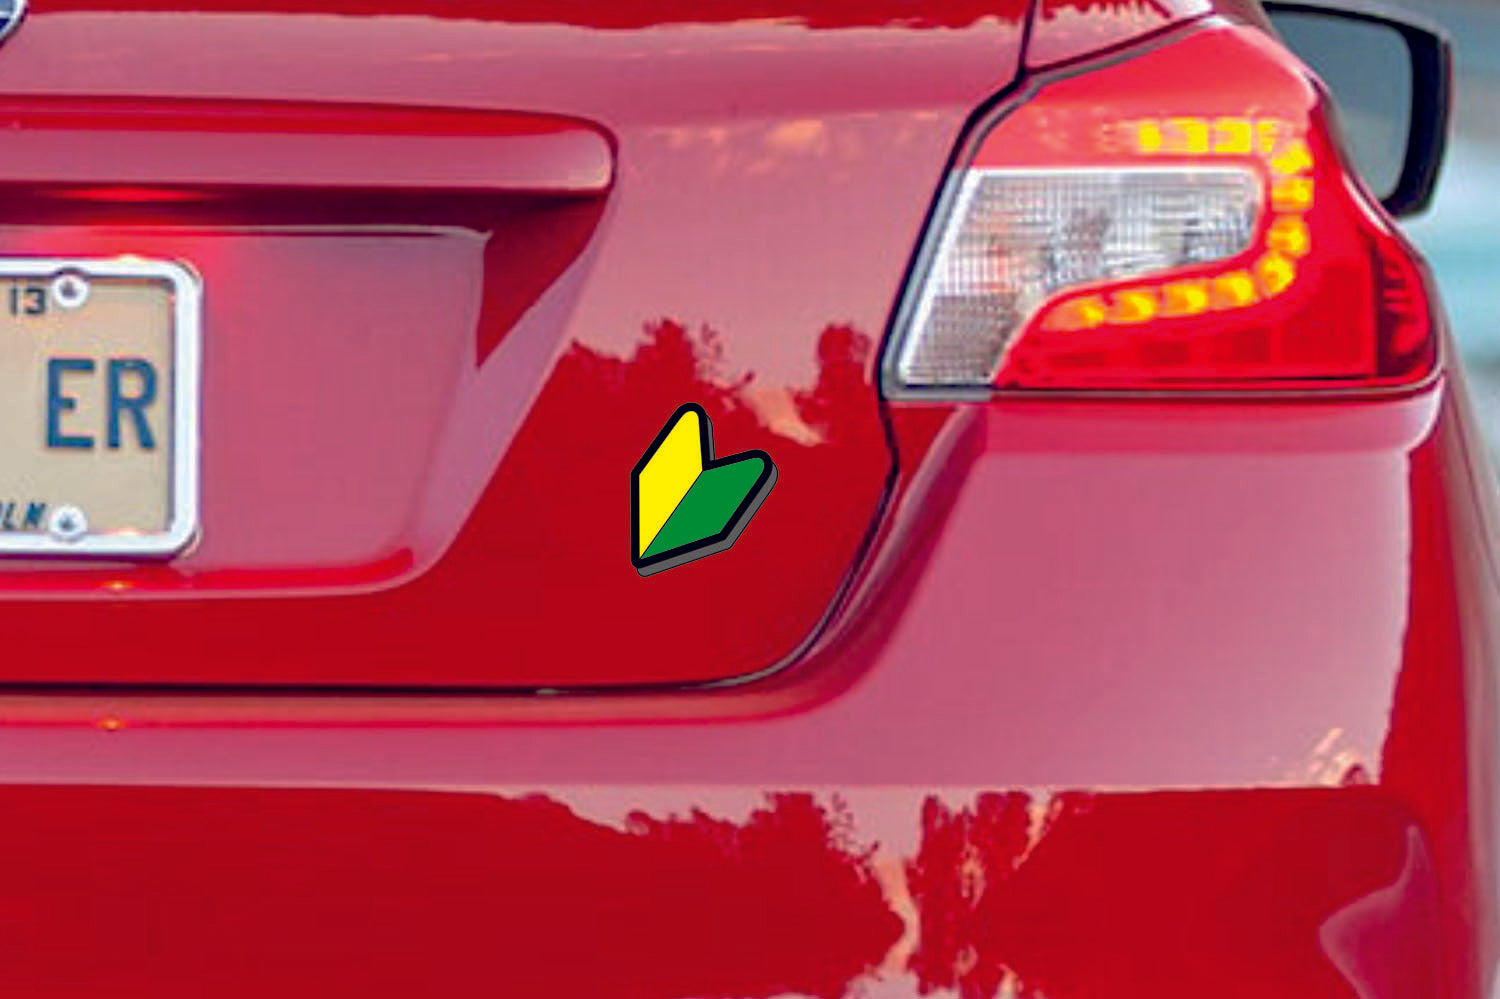 Toyota tailgate trunk rear emblem with JDM logo